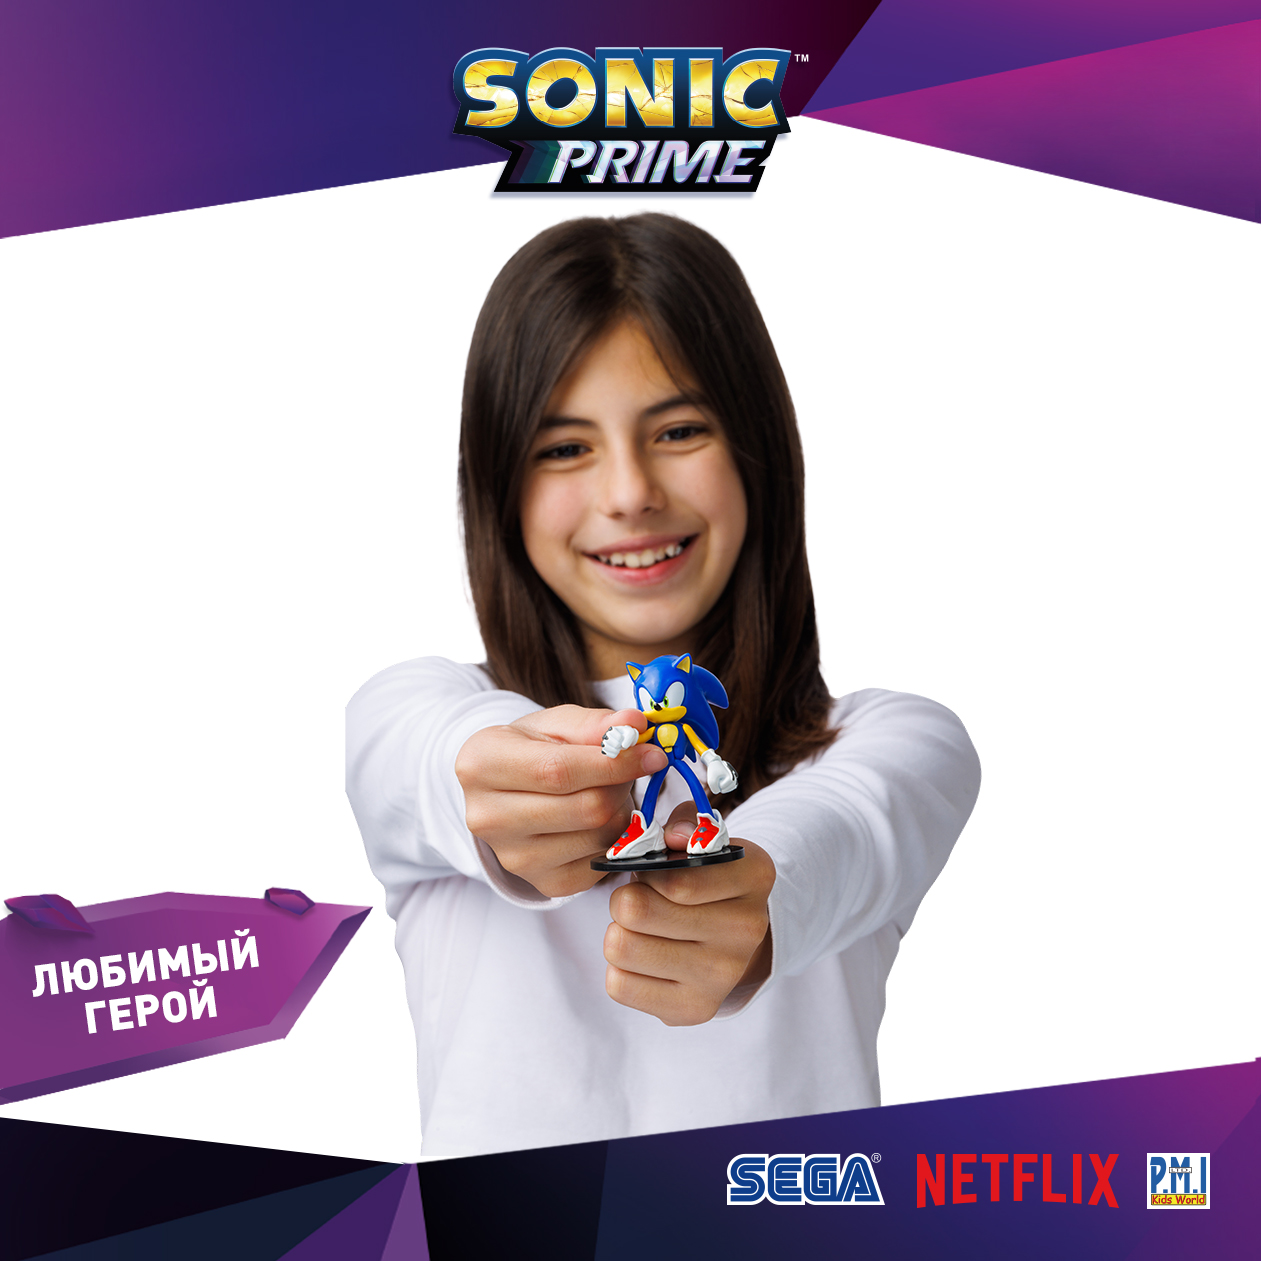 Набор игровой PMI Sonic Prime фигурки 3 шт SON2021-A - фото 9